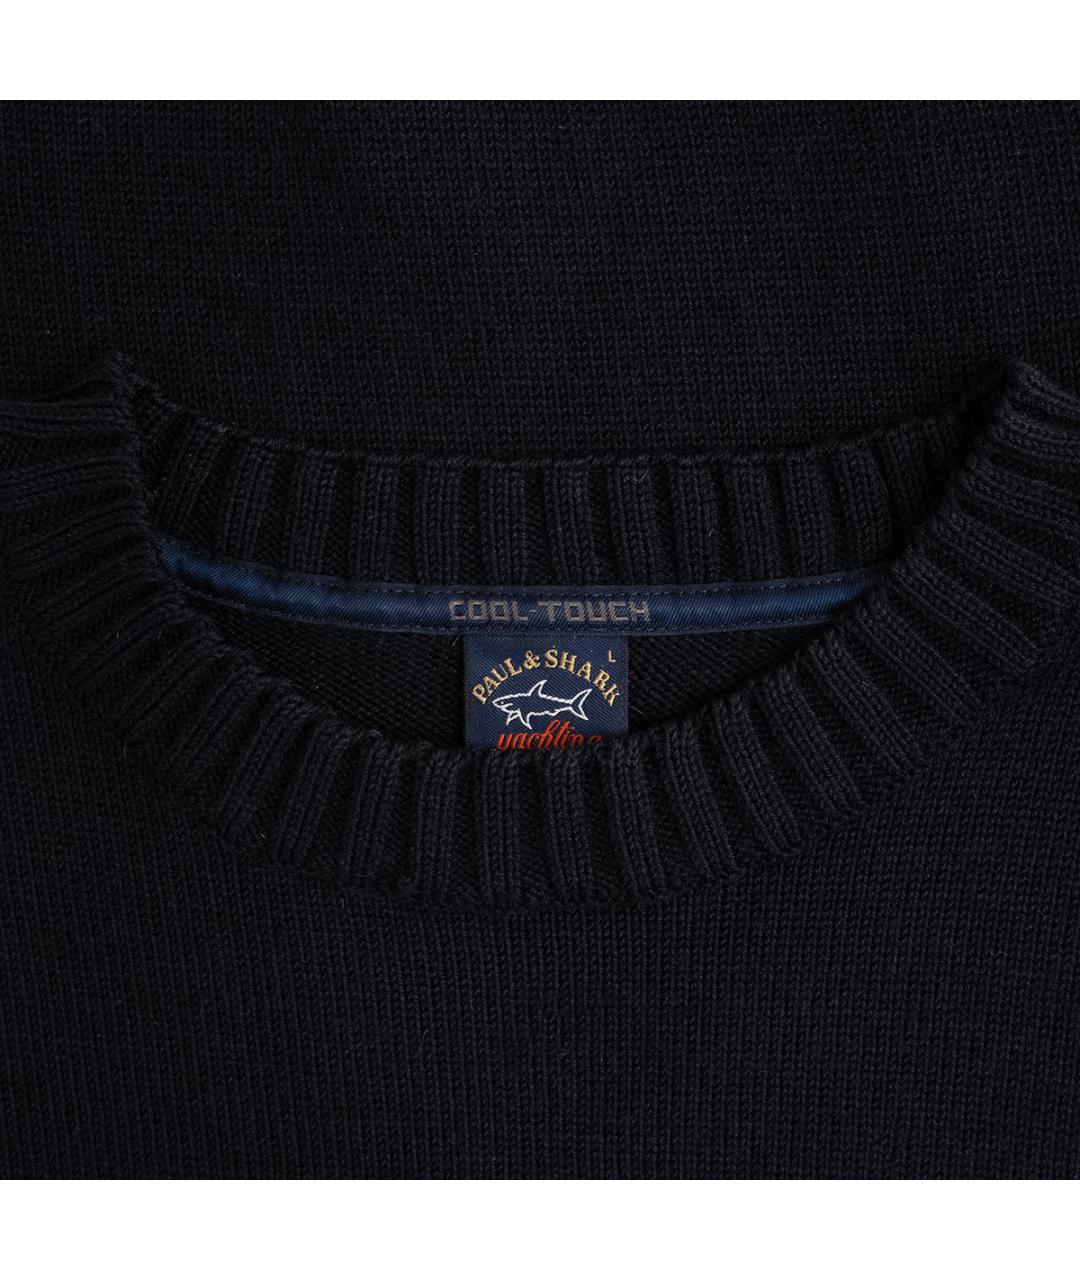 PAUL & SHARK Темно-синий шерстяной джемпер / свитер, фото 3